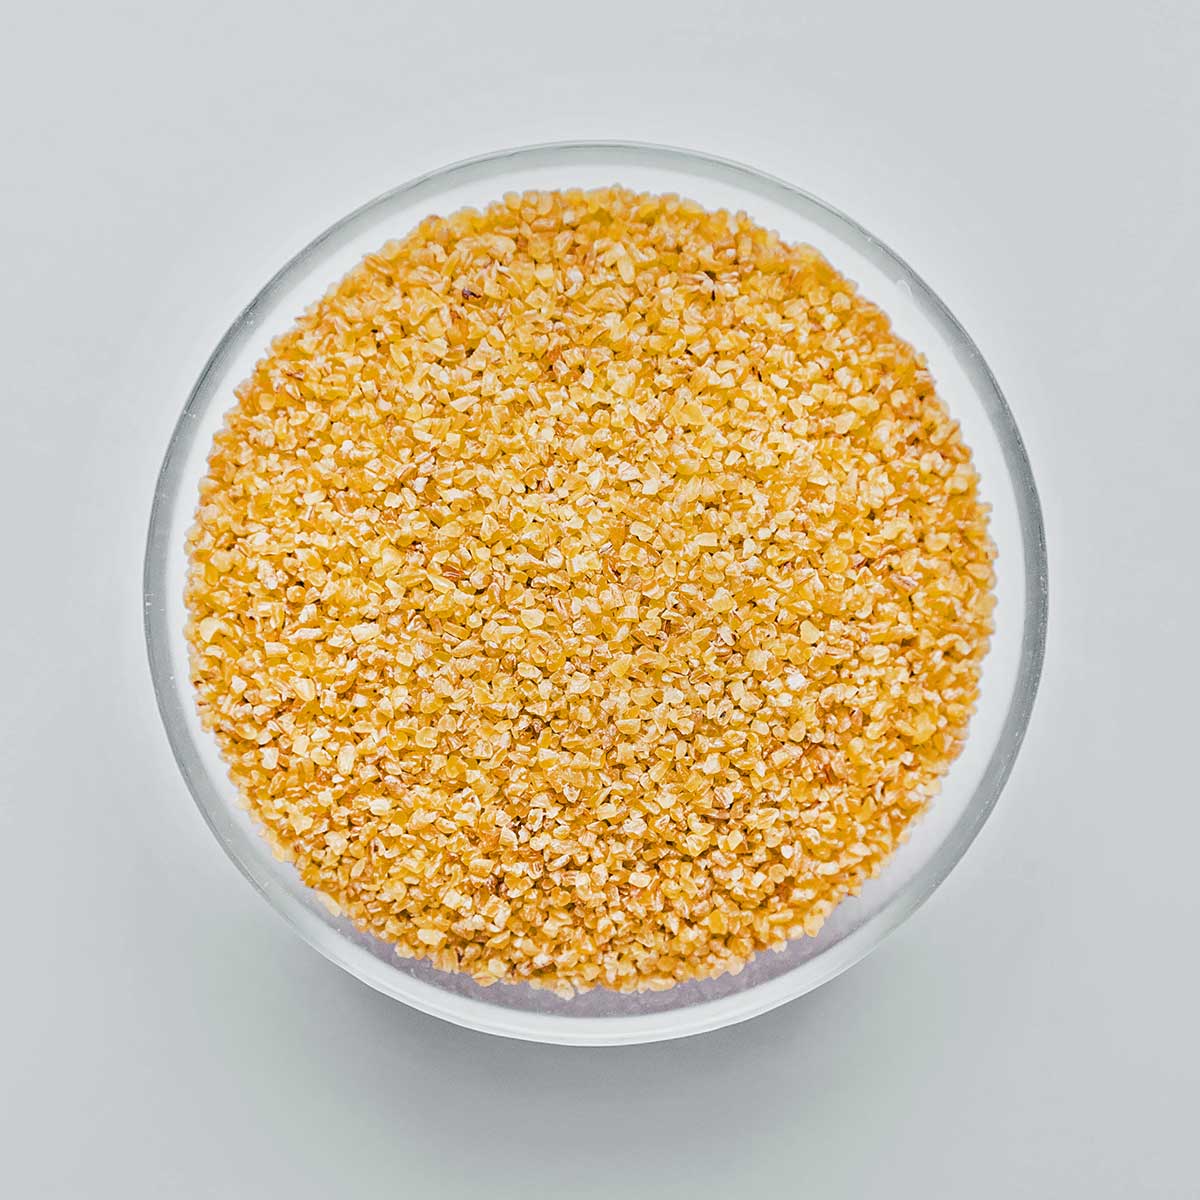 Bulgur grains in a bowl